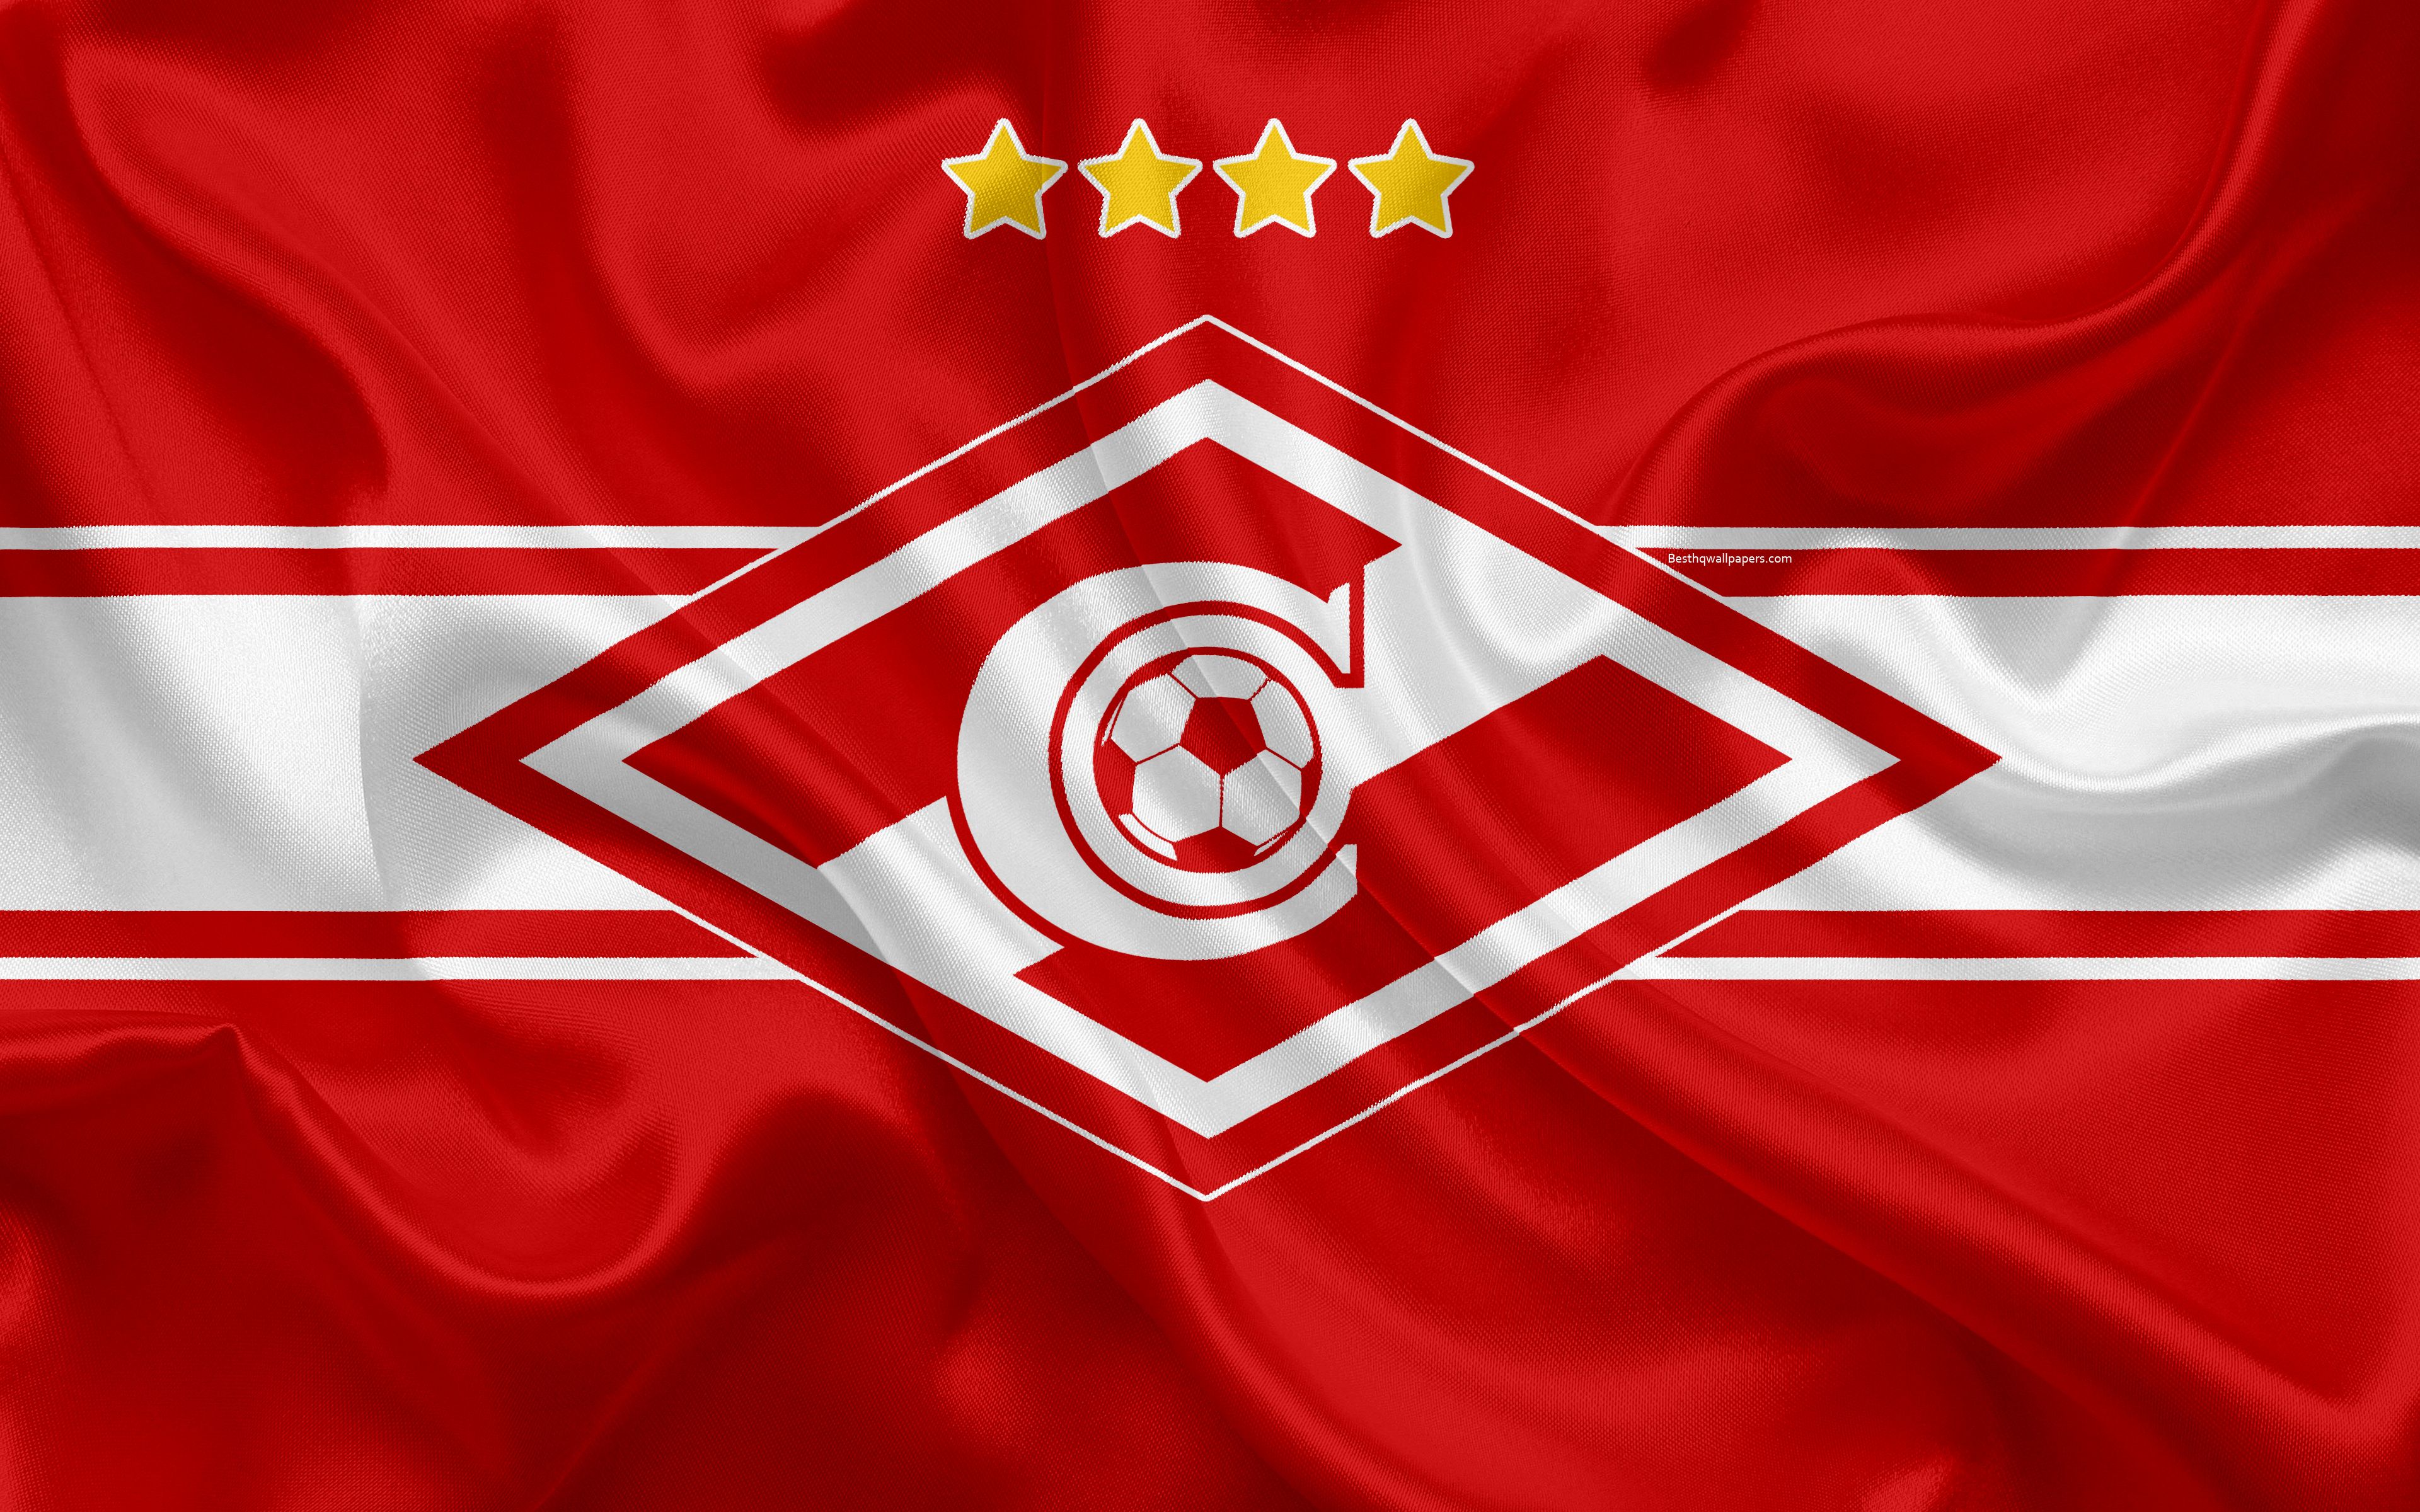 Download wallpaper FC Spartak Moscow, 4k, Russian football club